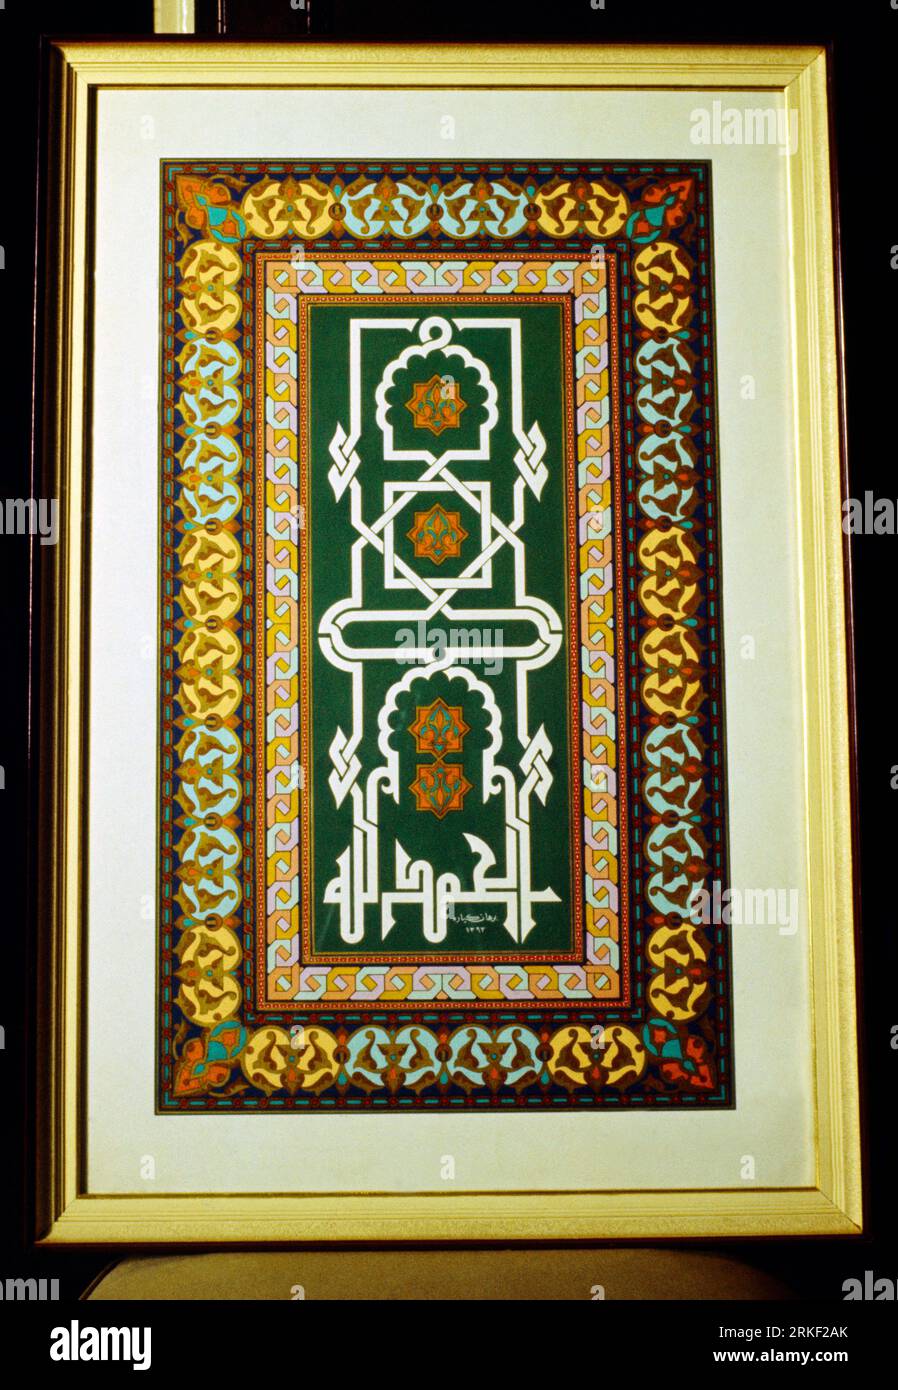 Islamische Kunst Arabische Kalligraphie im Rahmen Stockfoto